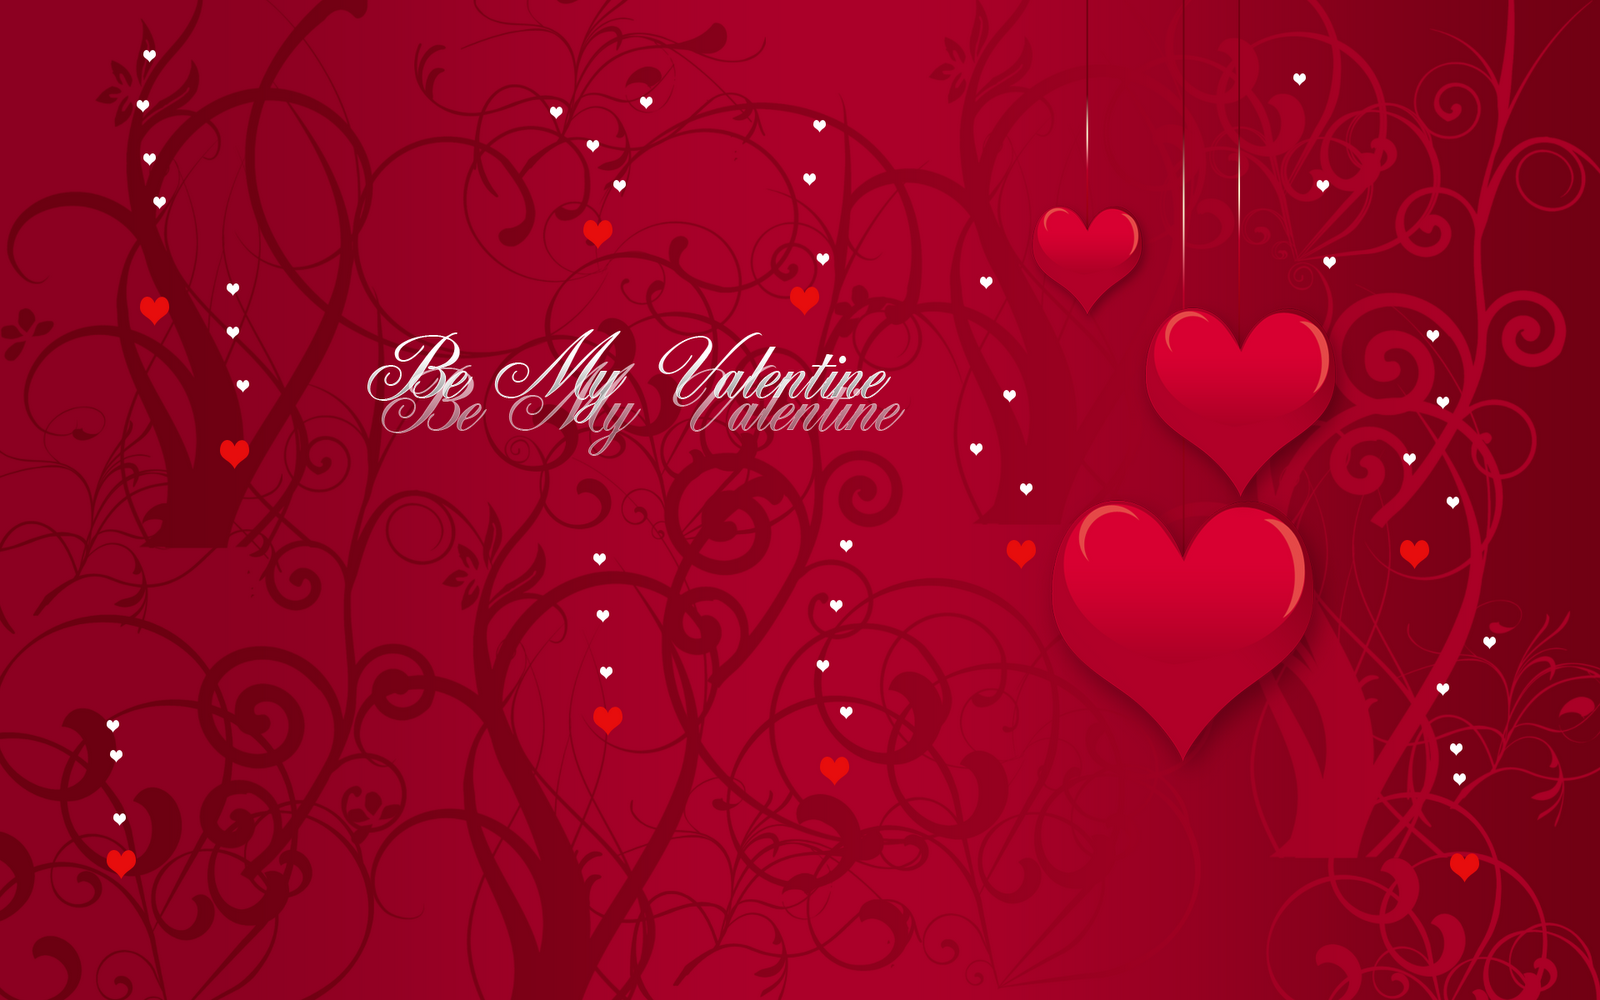 50+] Valentine's Day Wallpaper HD - WallpaperSafari